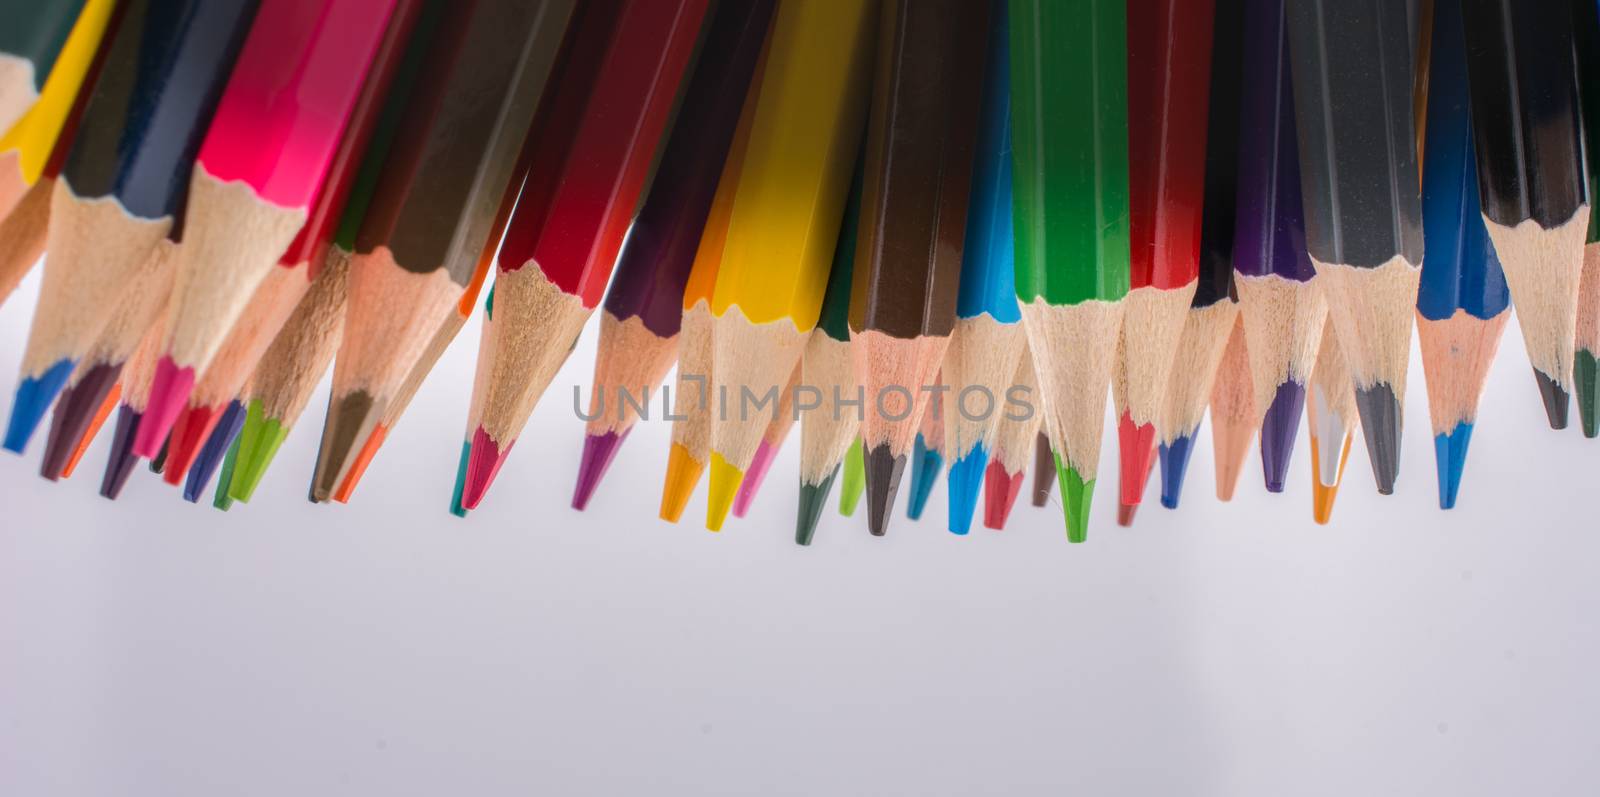 Color Pencils of various colors by berkay